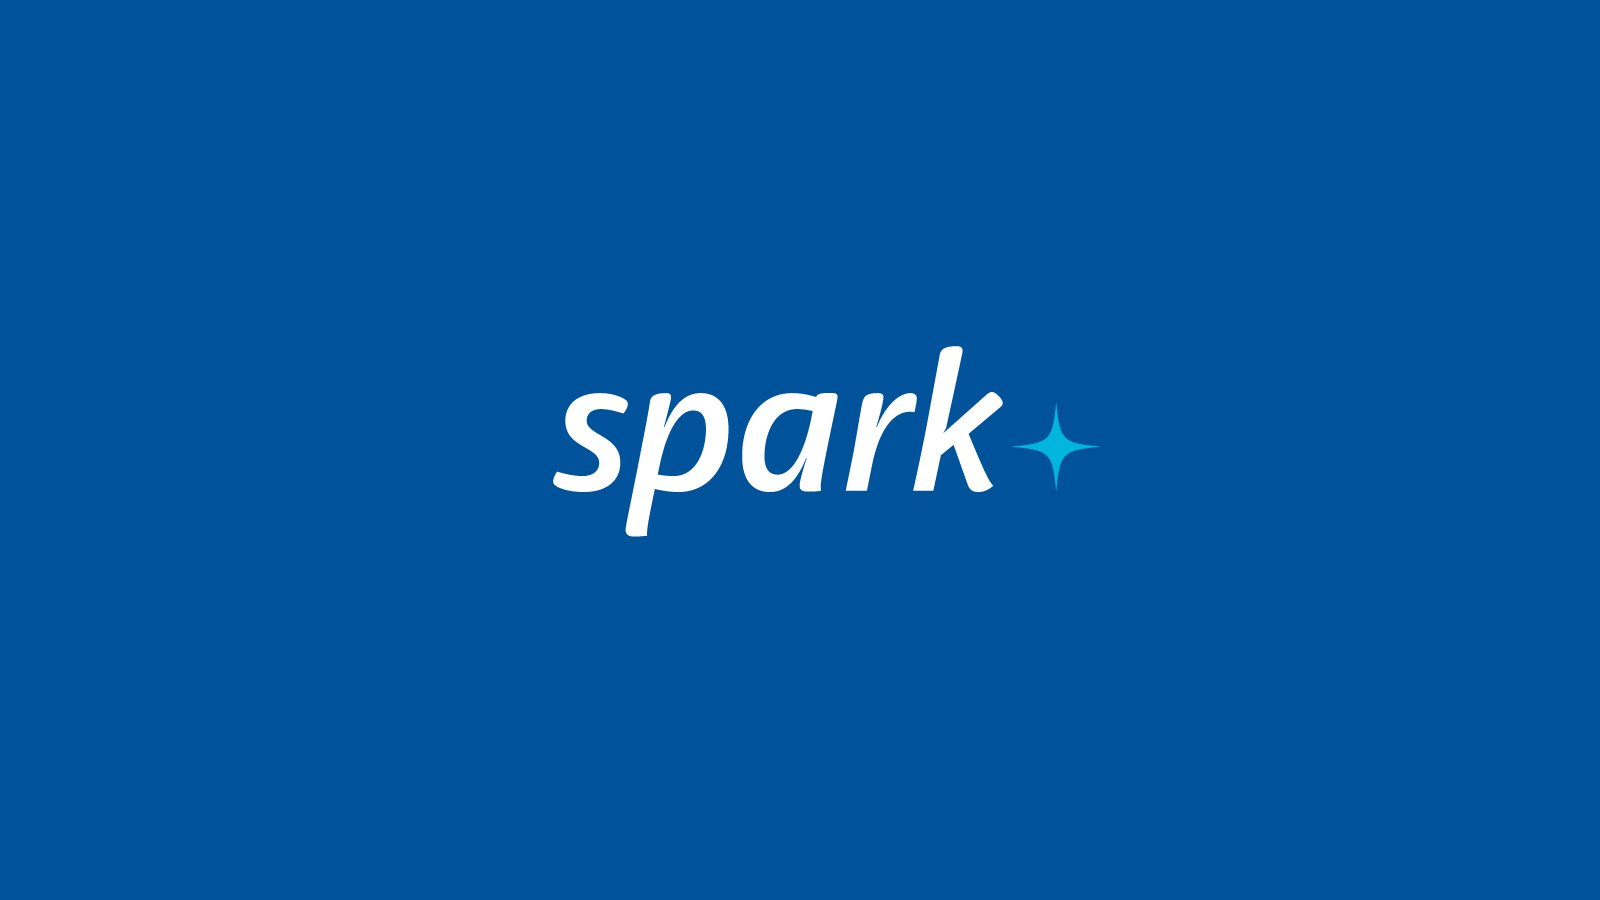 Final spark logo